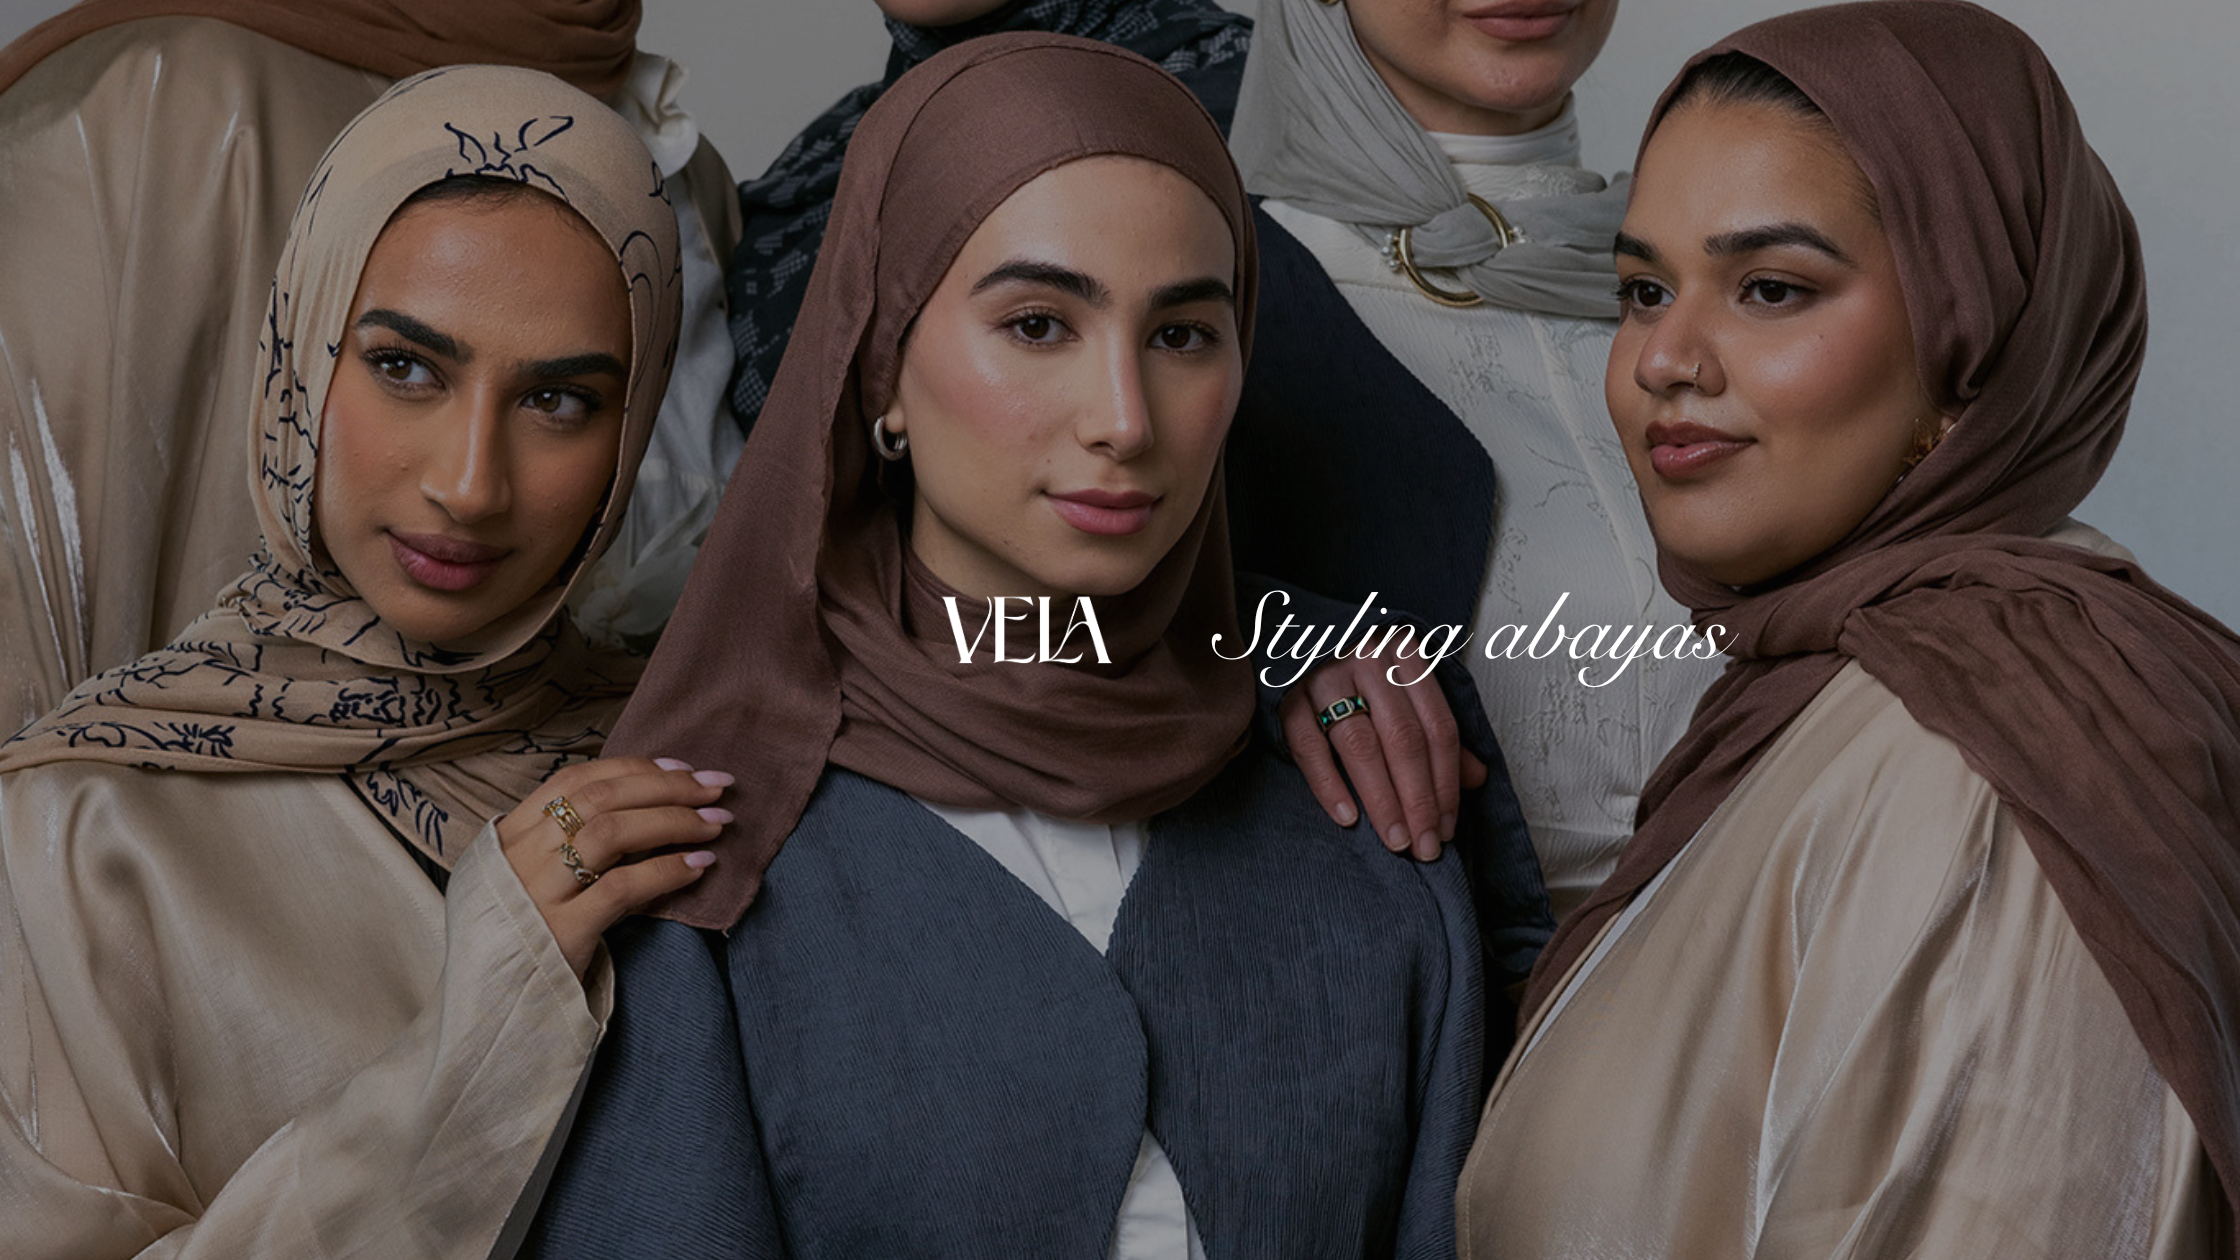 Balancing cultures, one abaya at a time